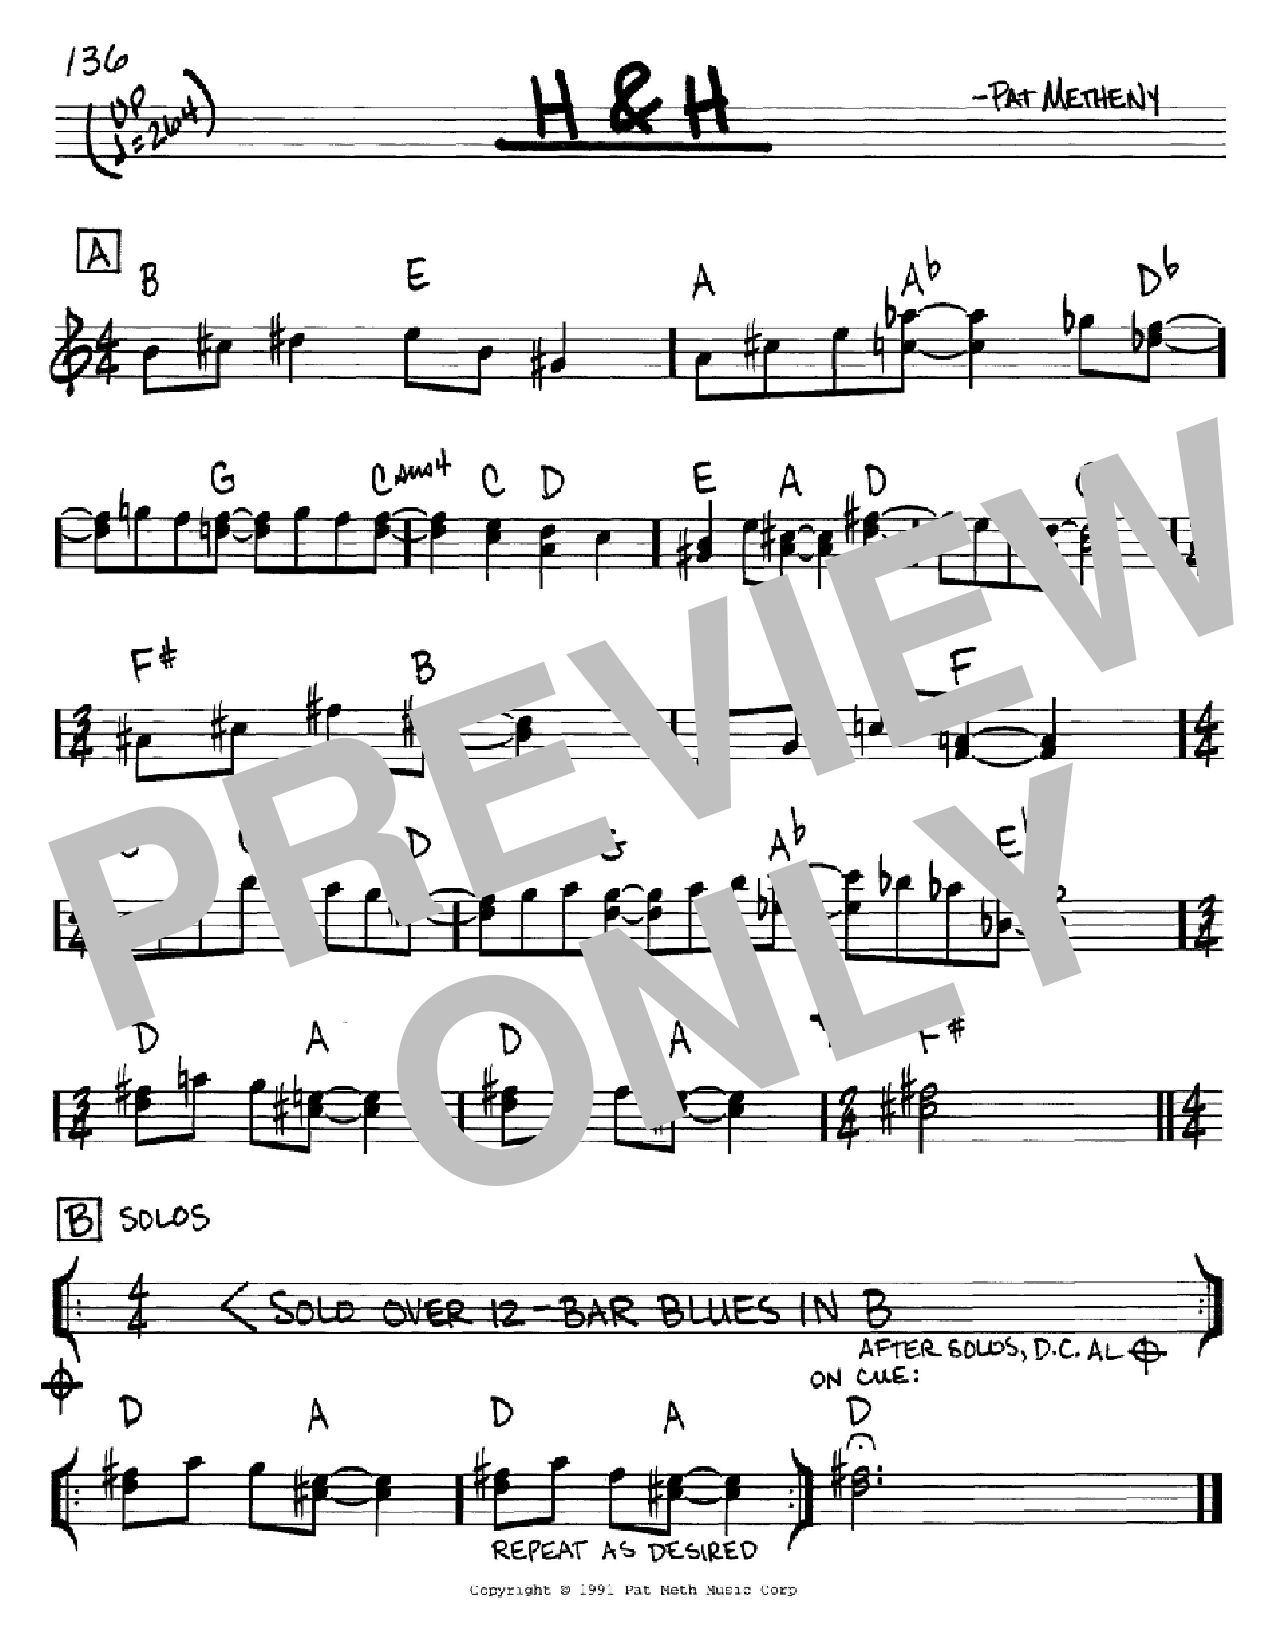 Pat Metheny H & H Sheet Music Notes & Chords for Guitar Tab - Download or Print PDF